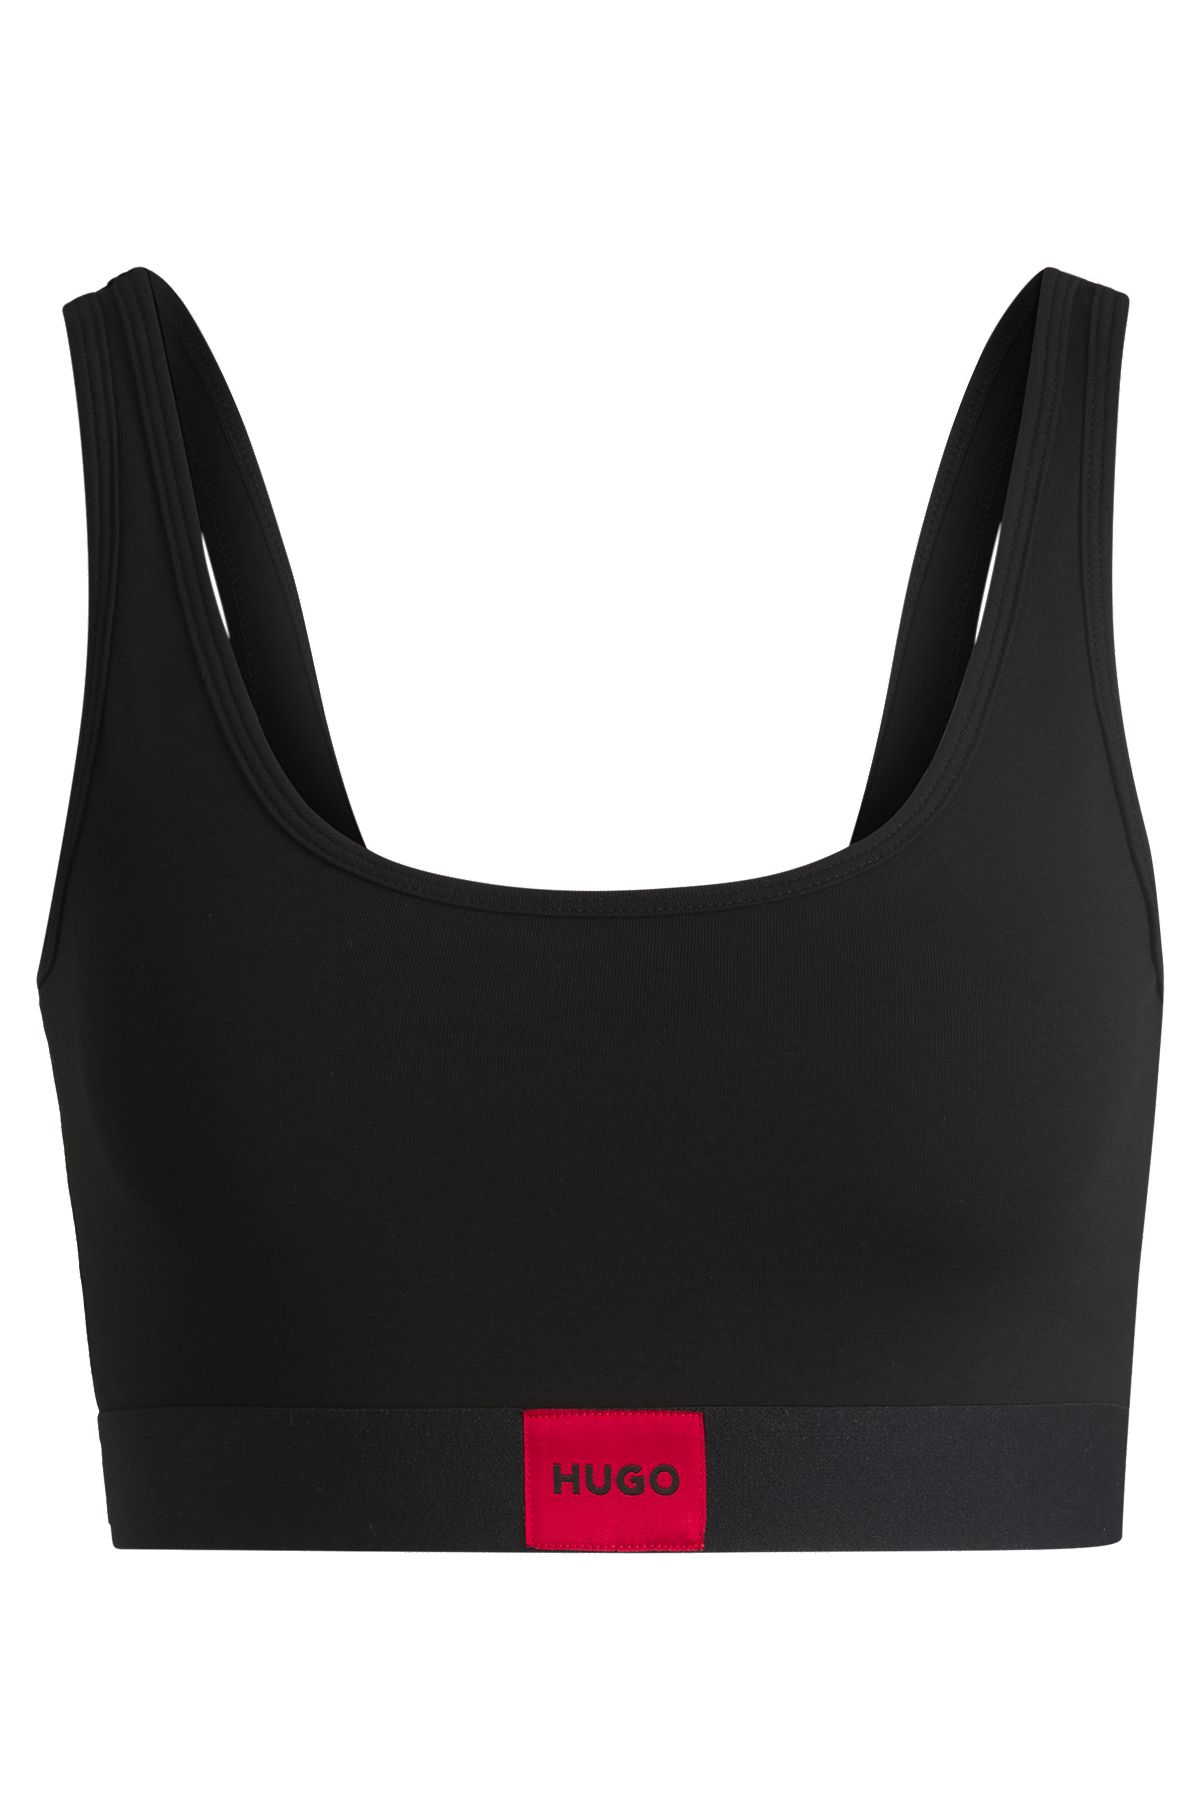 HUGO - Bandeau bra in stretch cotton with logo label